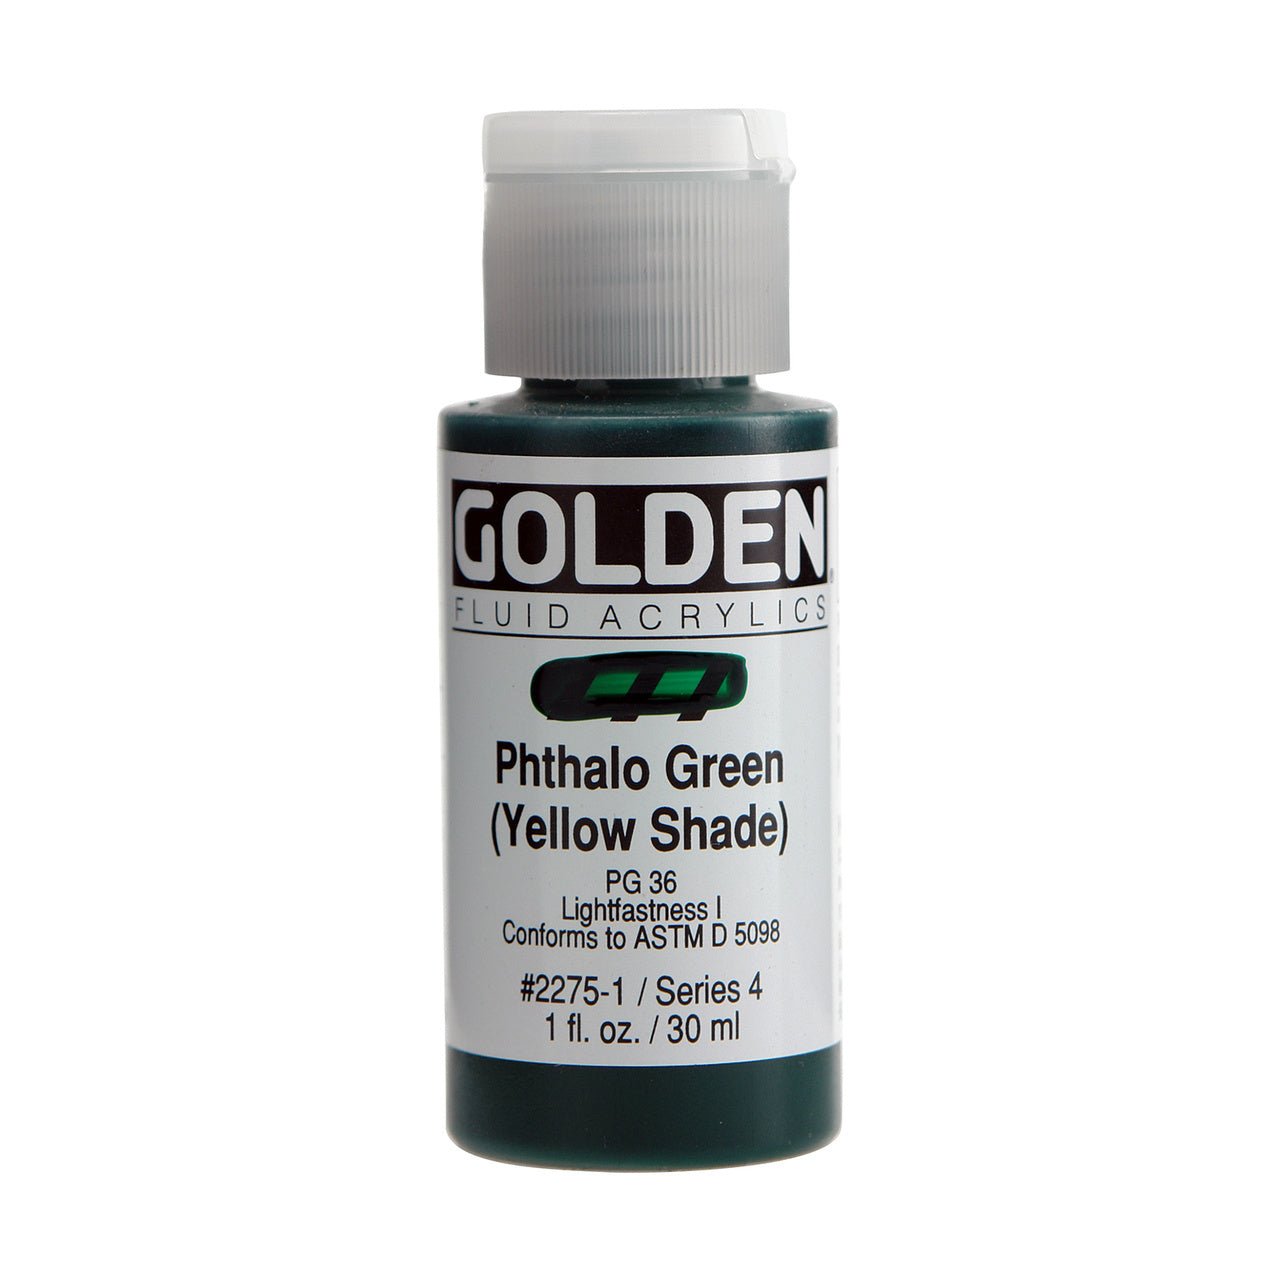 Golden Fluid Acrylic Phthalo Green (yellow shade) 1 oz - merriartist.com